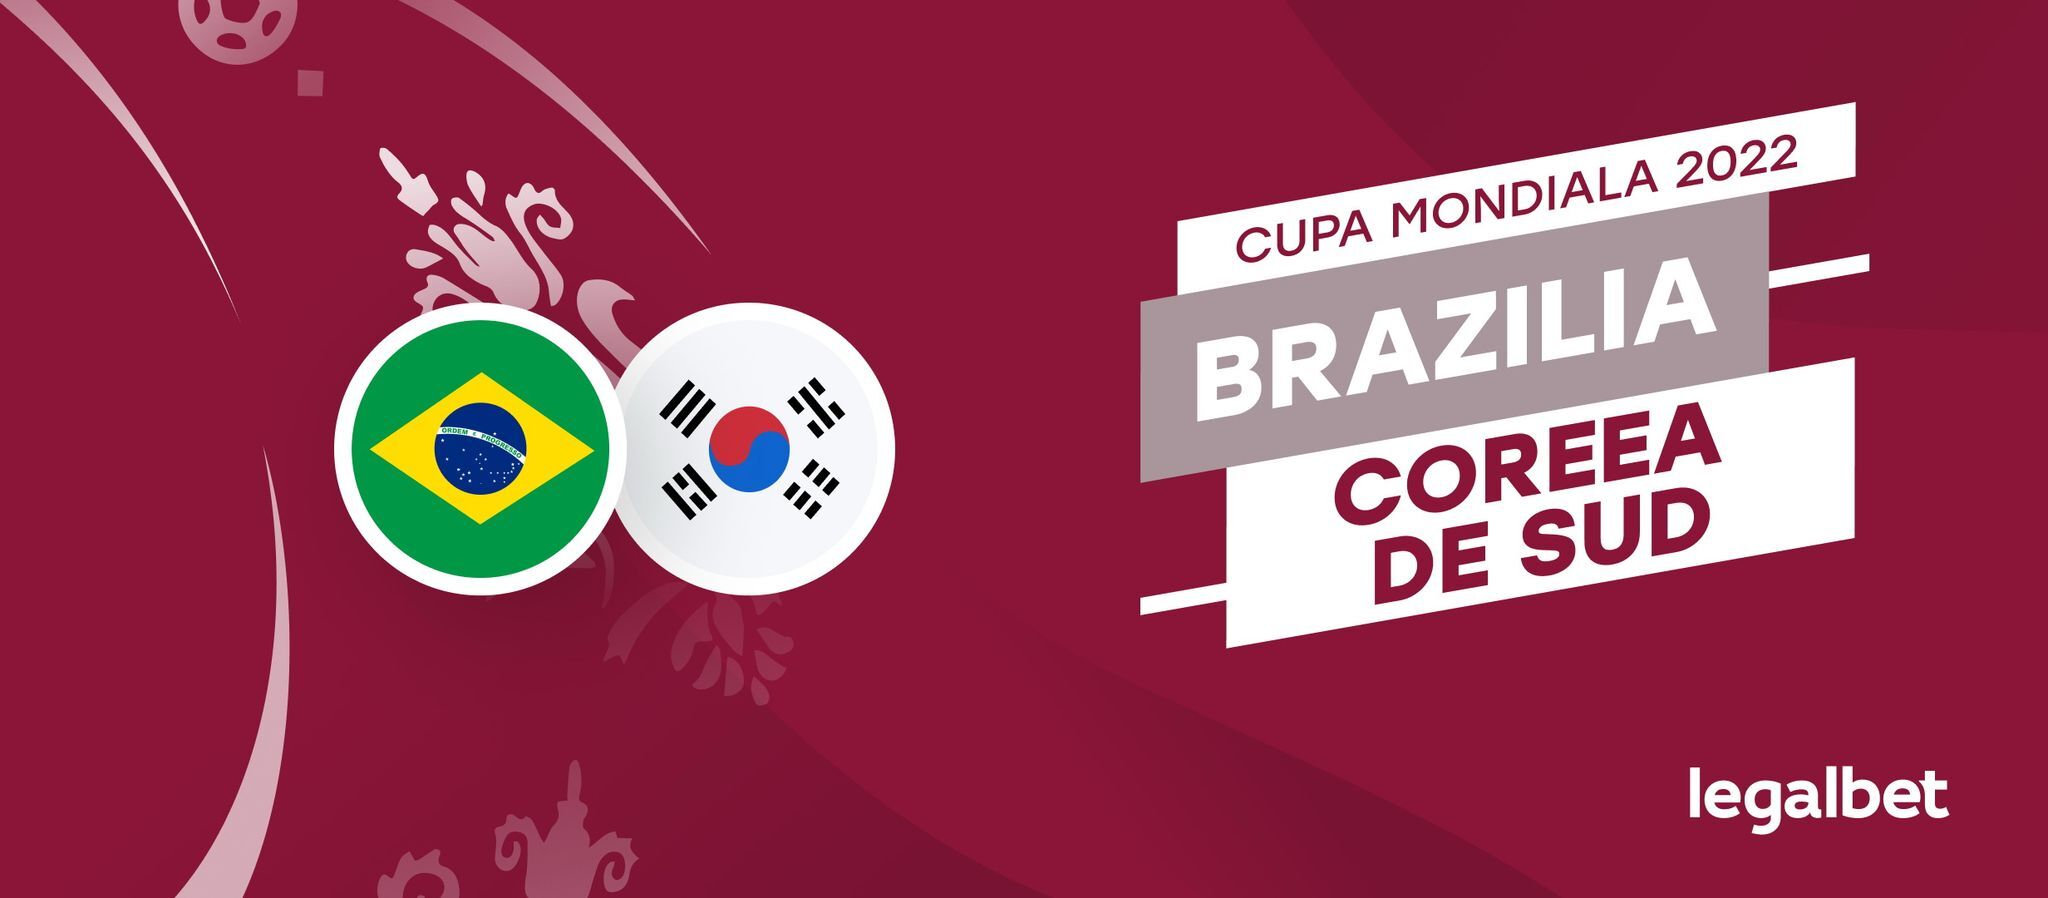 Brazilia - Coreea de Sud | Cote la pariuri, ponturi si informatii